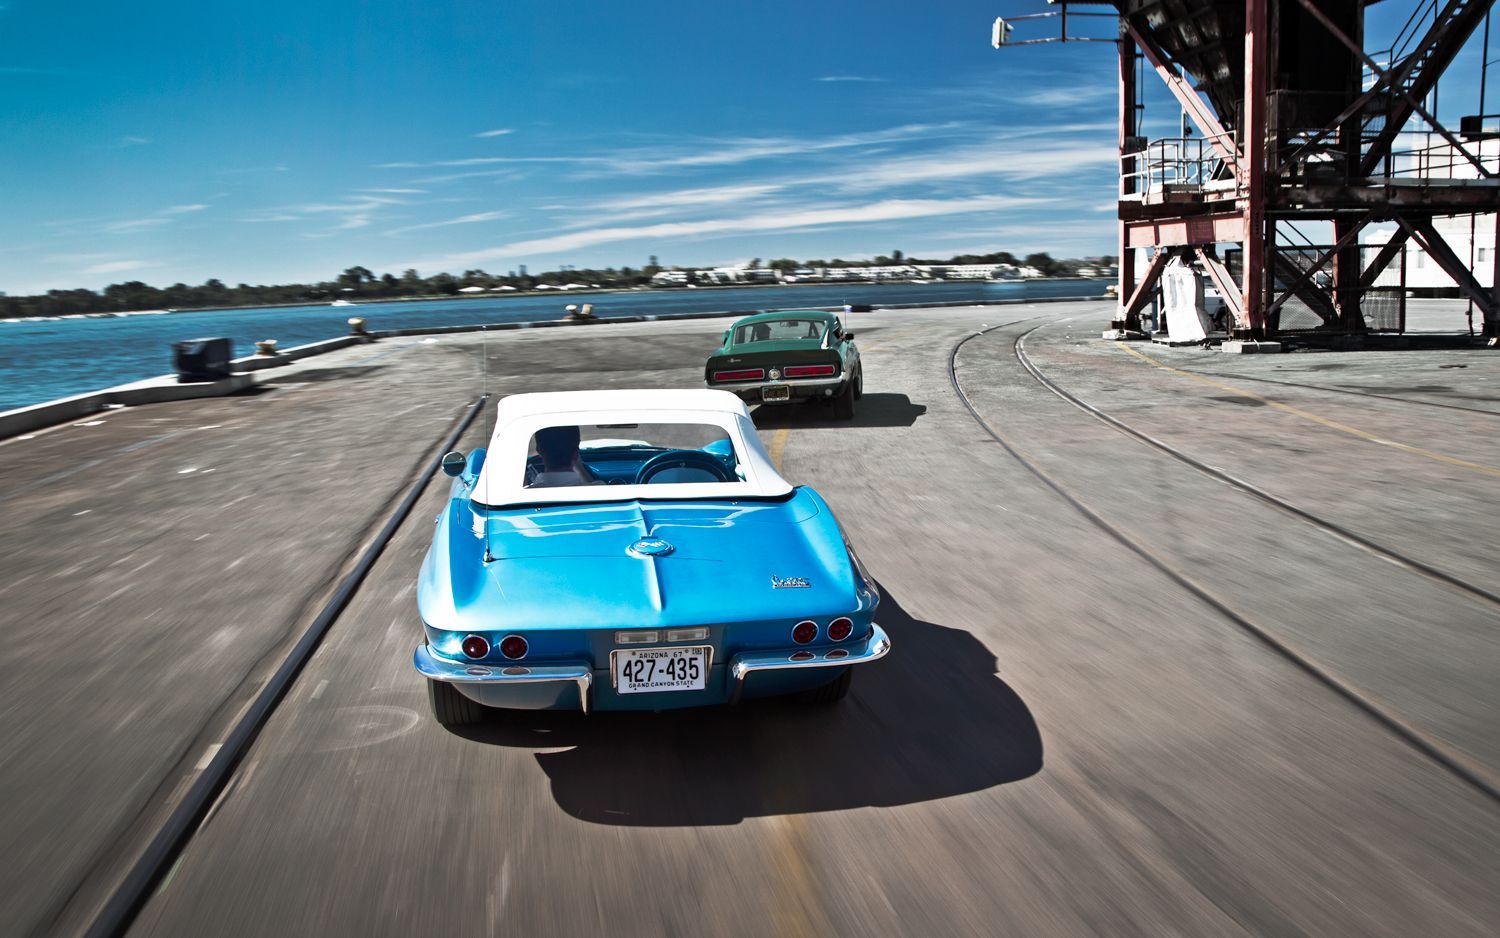 1967 Mustang Shelby GT500 Vs 1967 Corvette sting ray